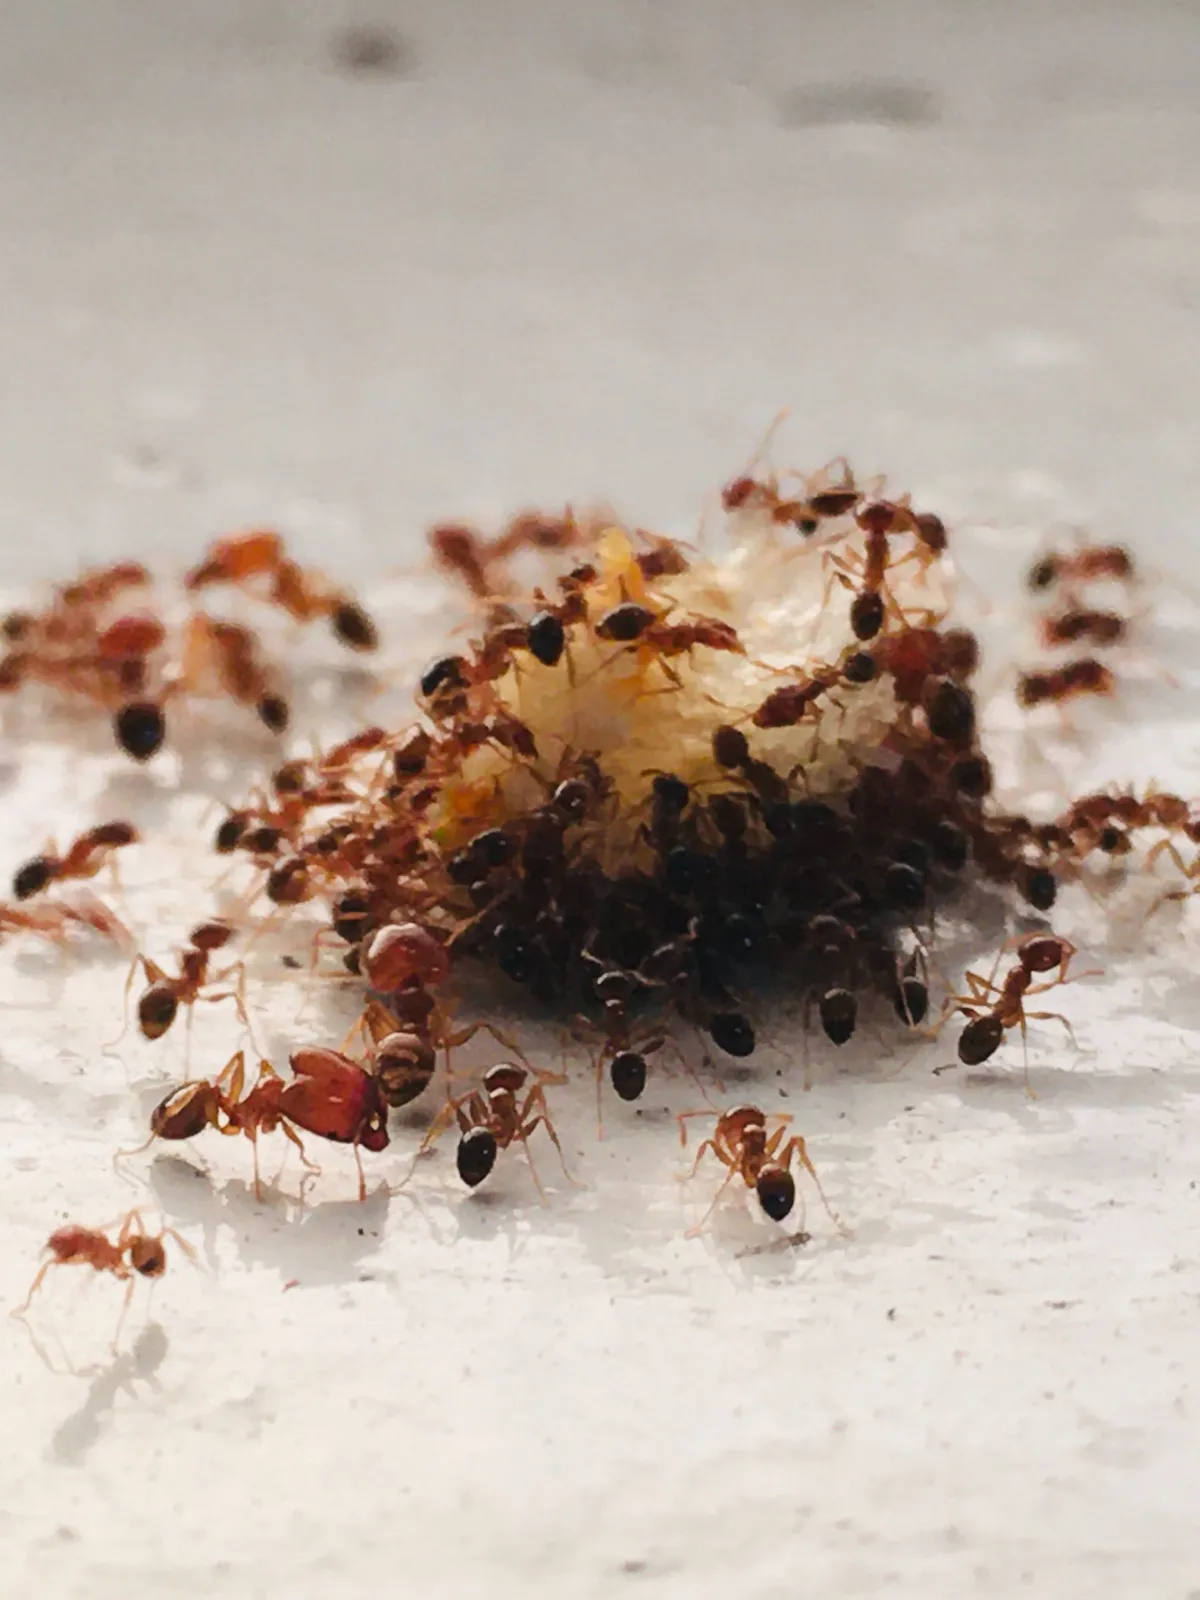 nid fourmis nourriture sucre infestation insectes sol appat piege anti fourmis